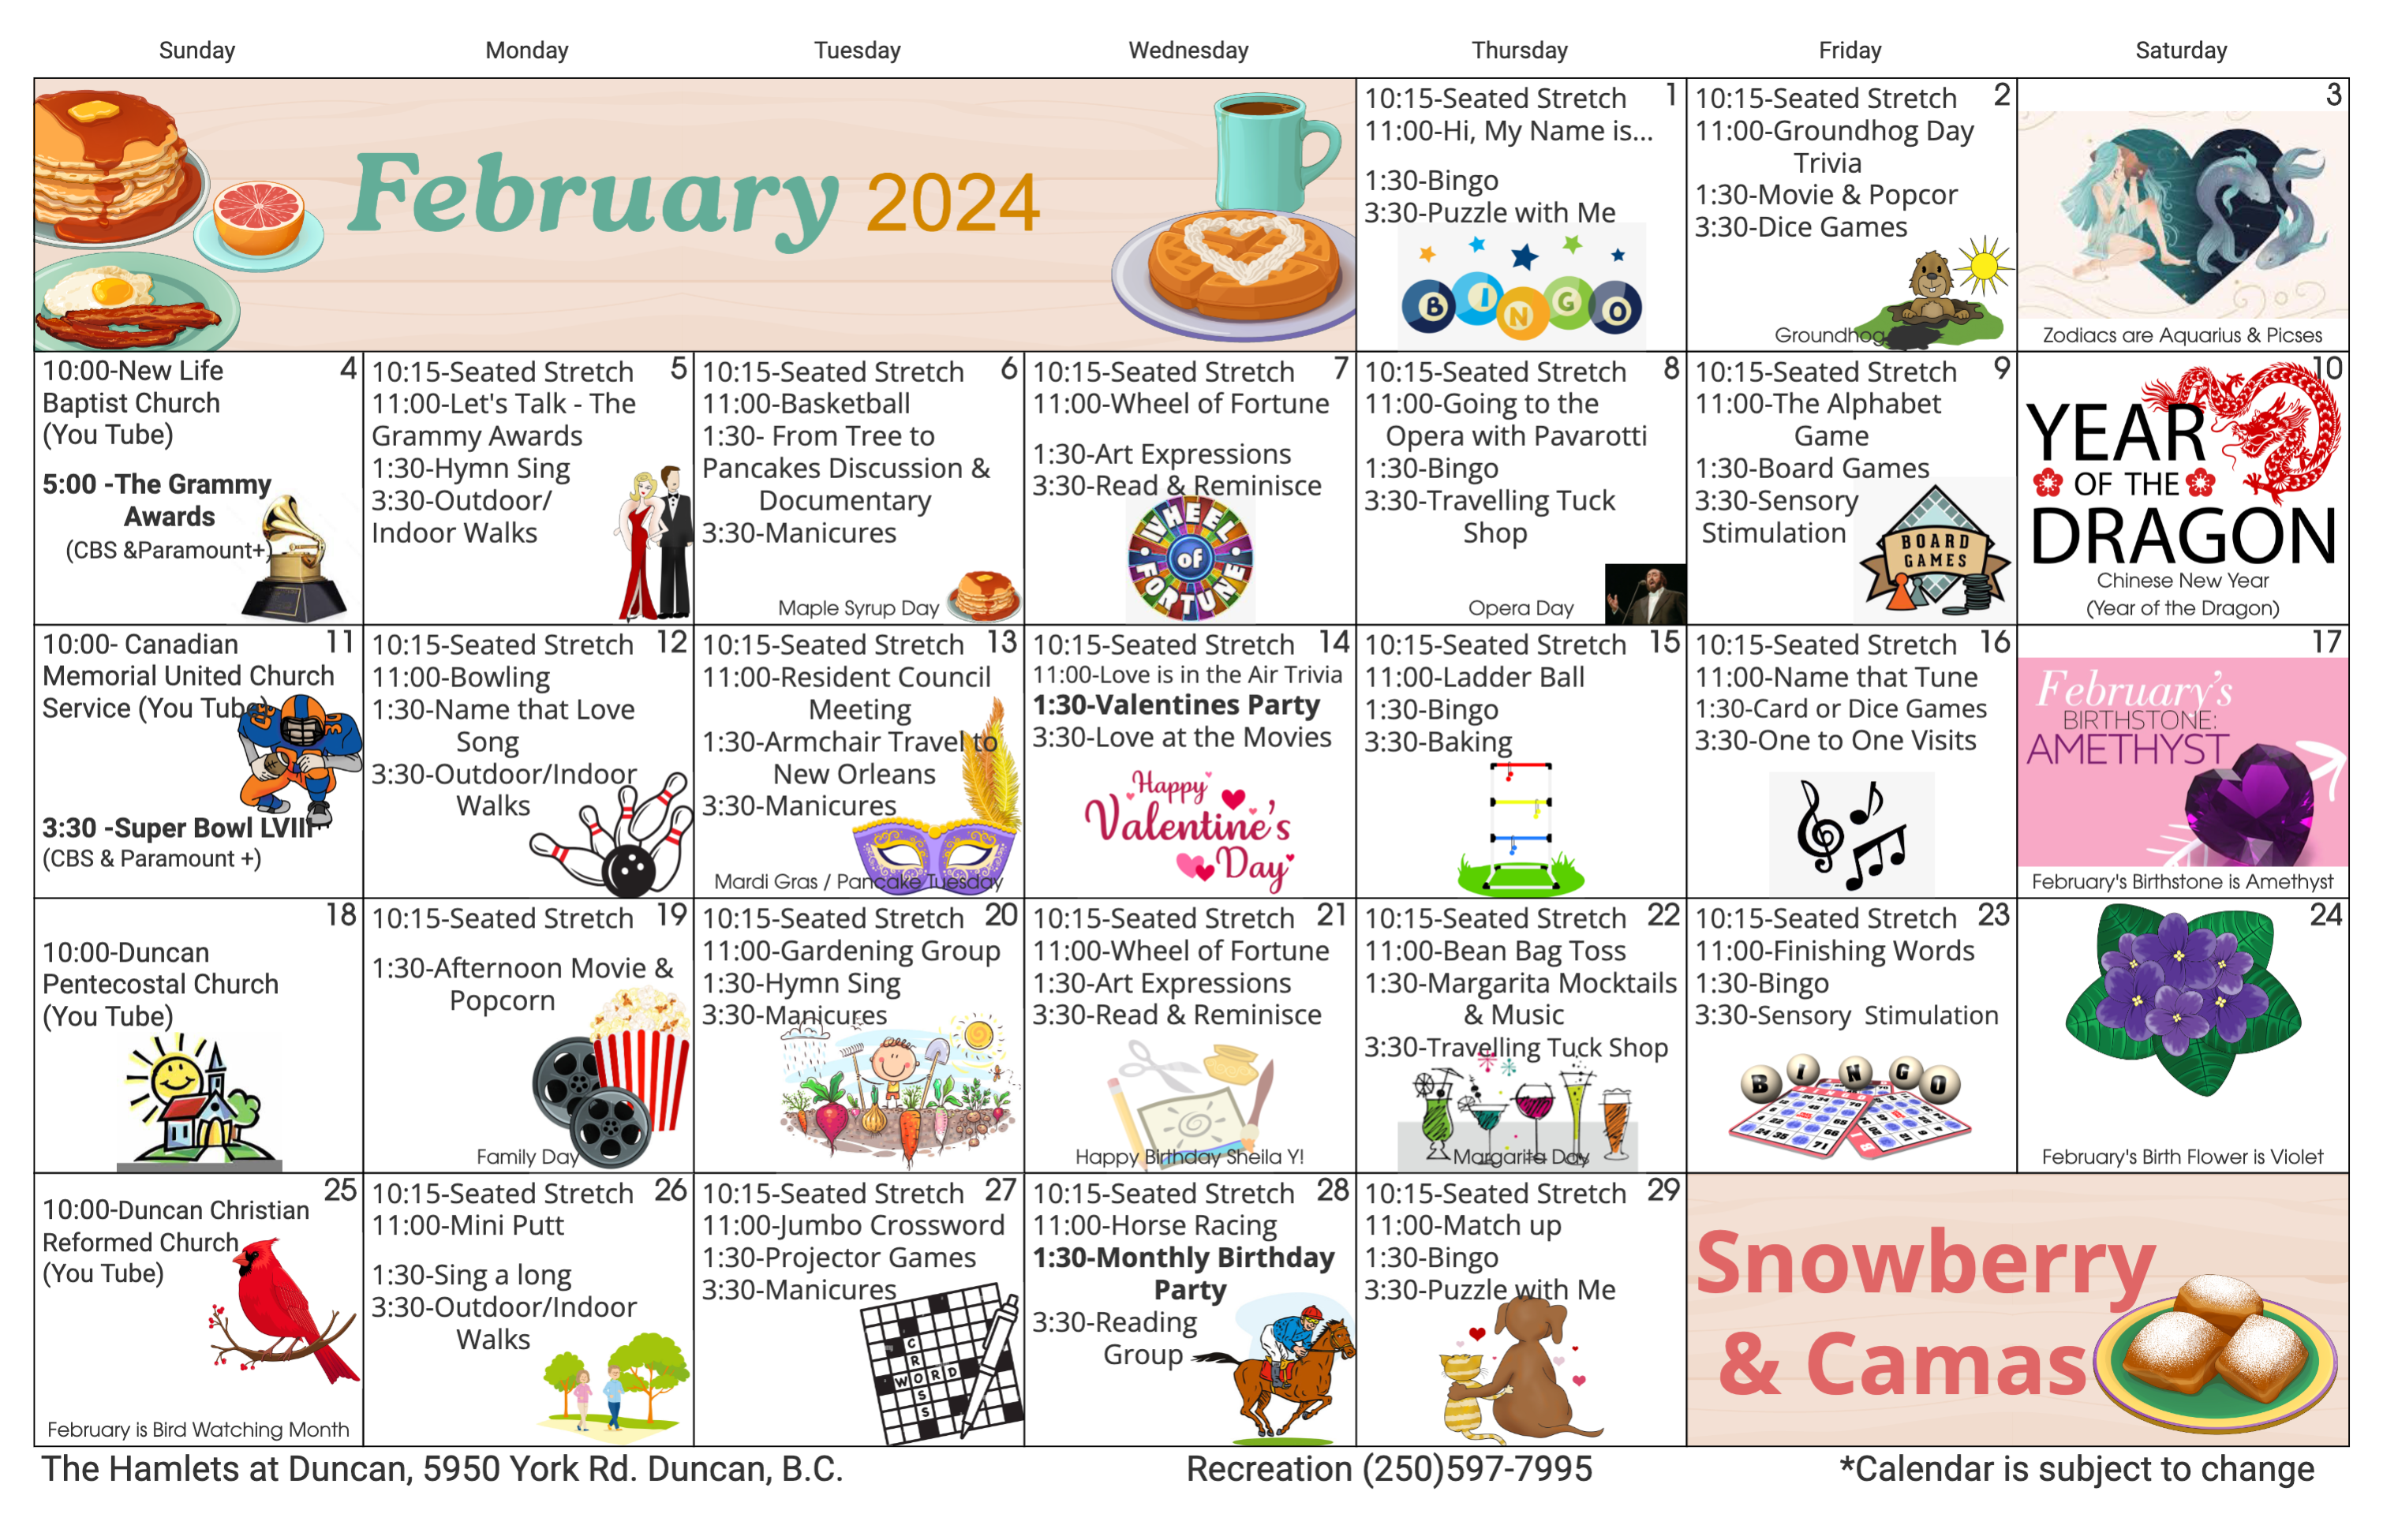 The Hamlets at Duncan February 2024 Snowberry and Camas event calendar